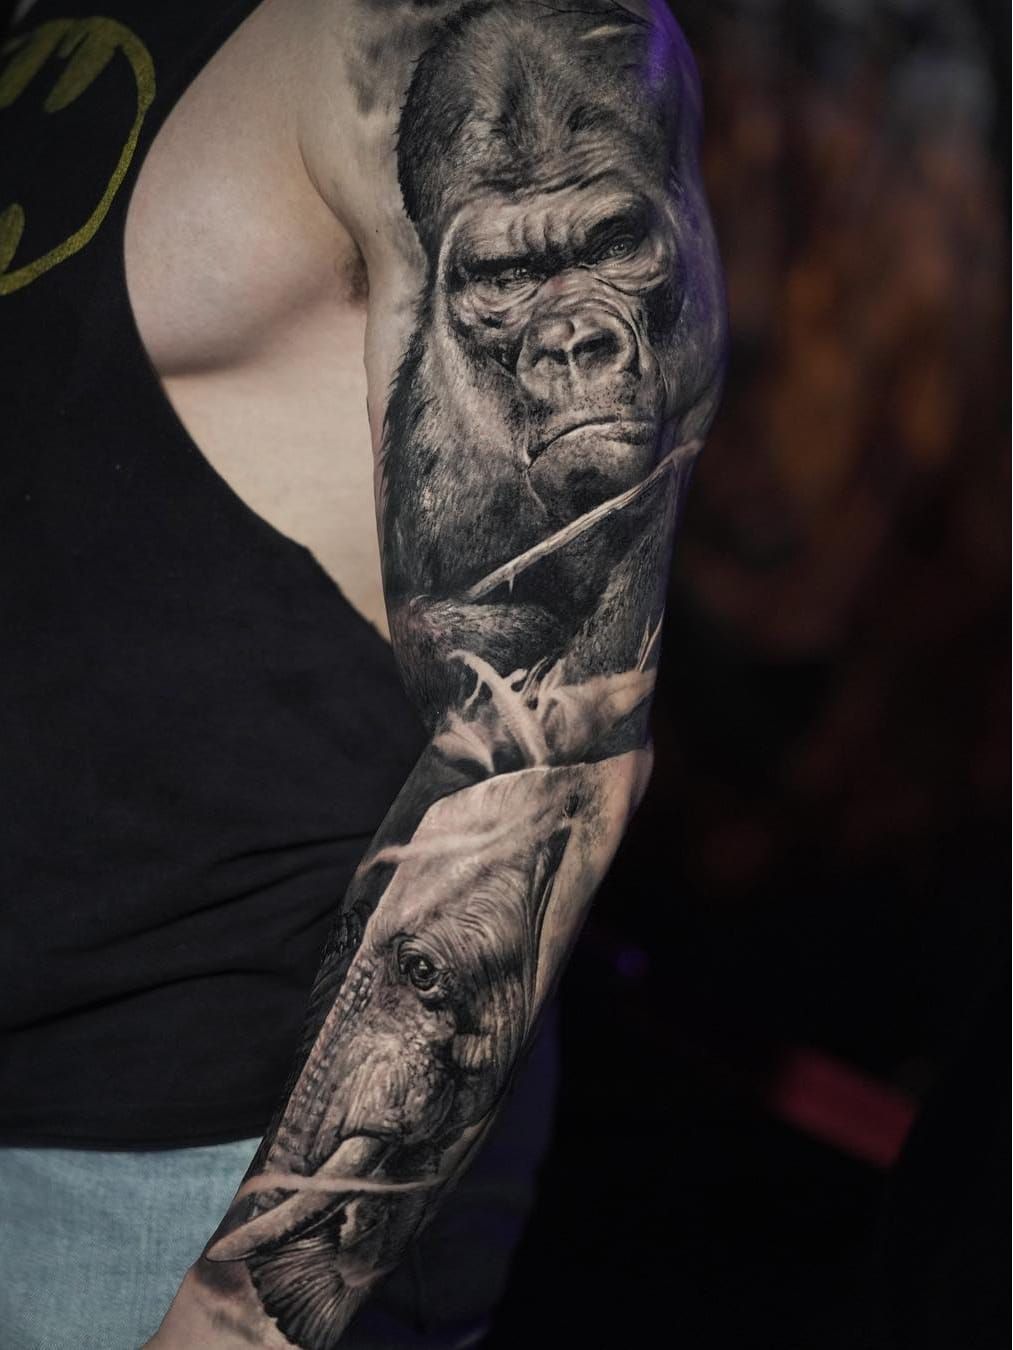 Minimalistic monkey portrait tattoo done on the upper